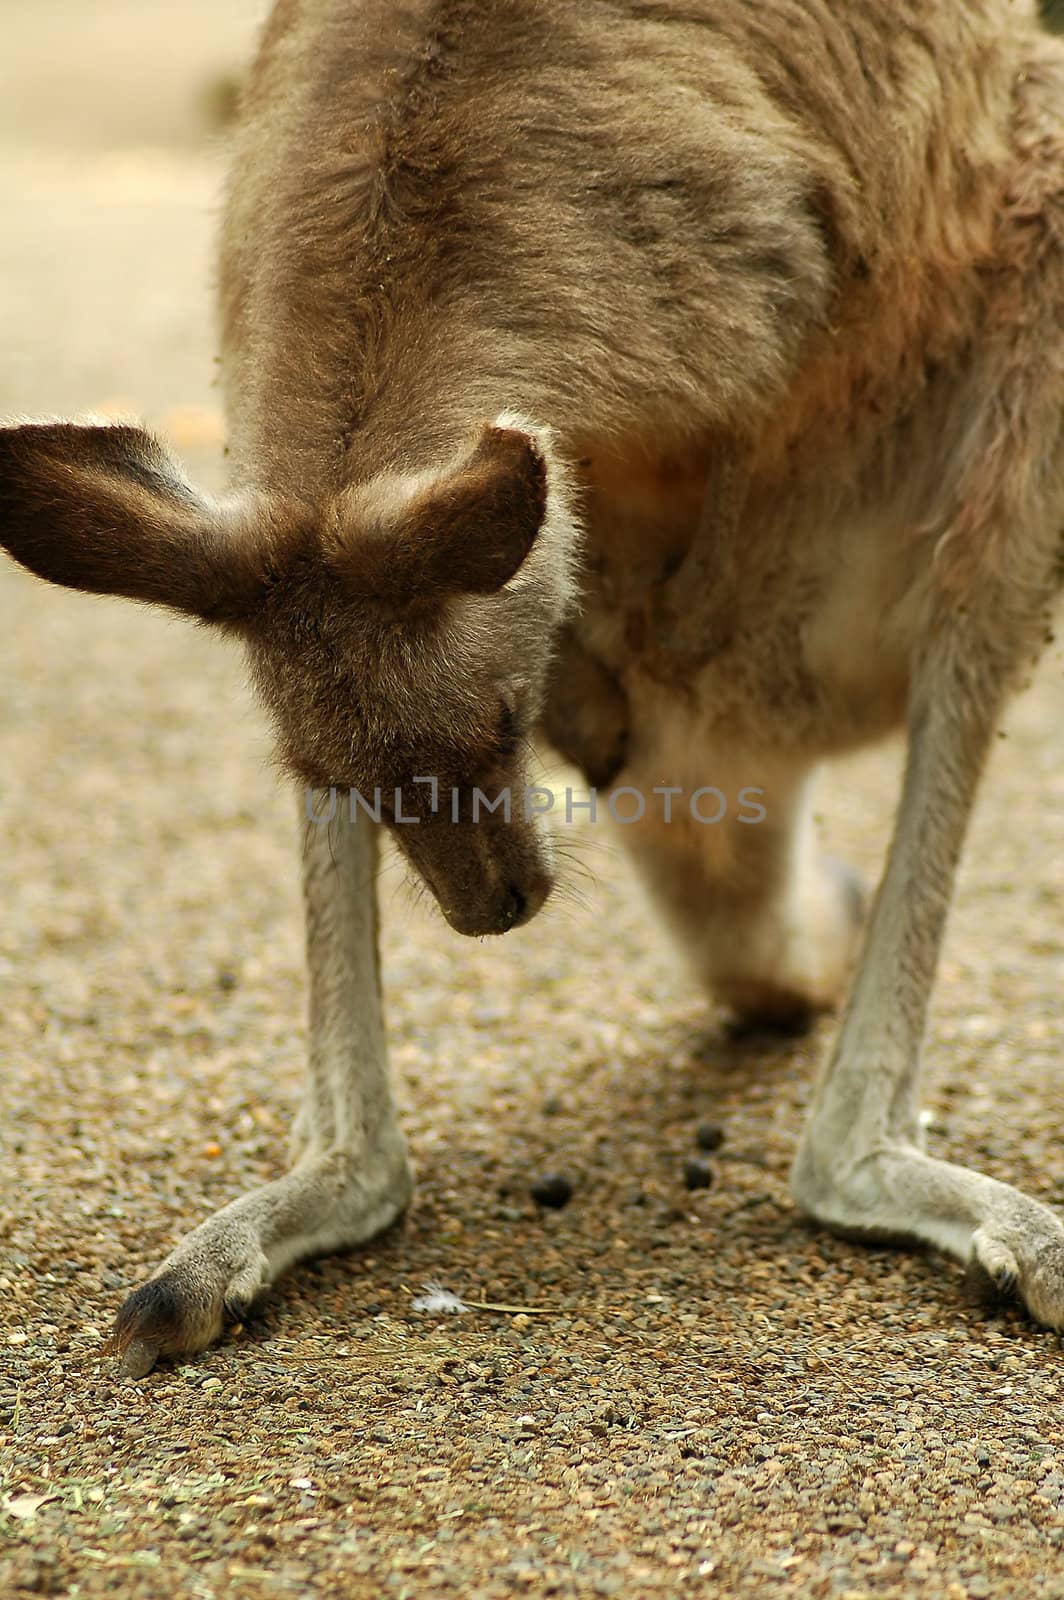 brown small kangaroo detail photo, photo taken in sydney zoo